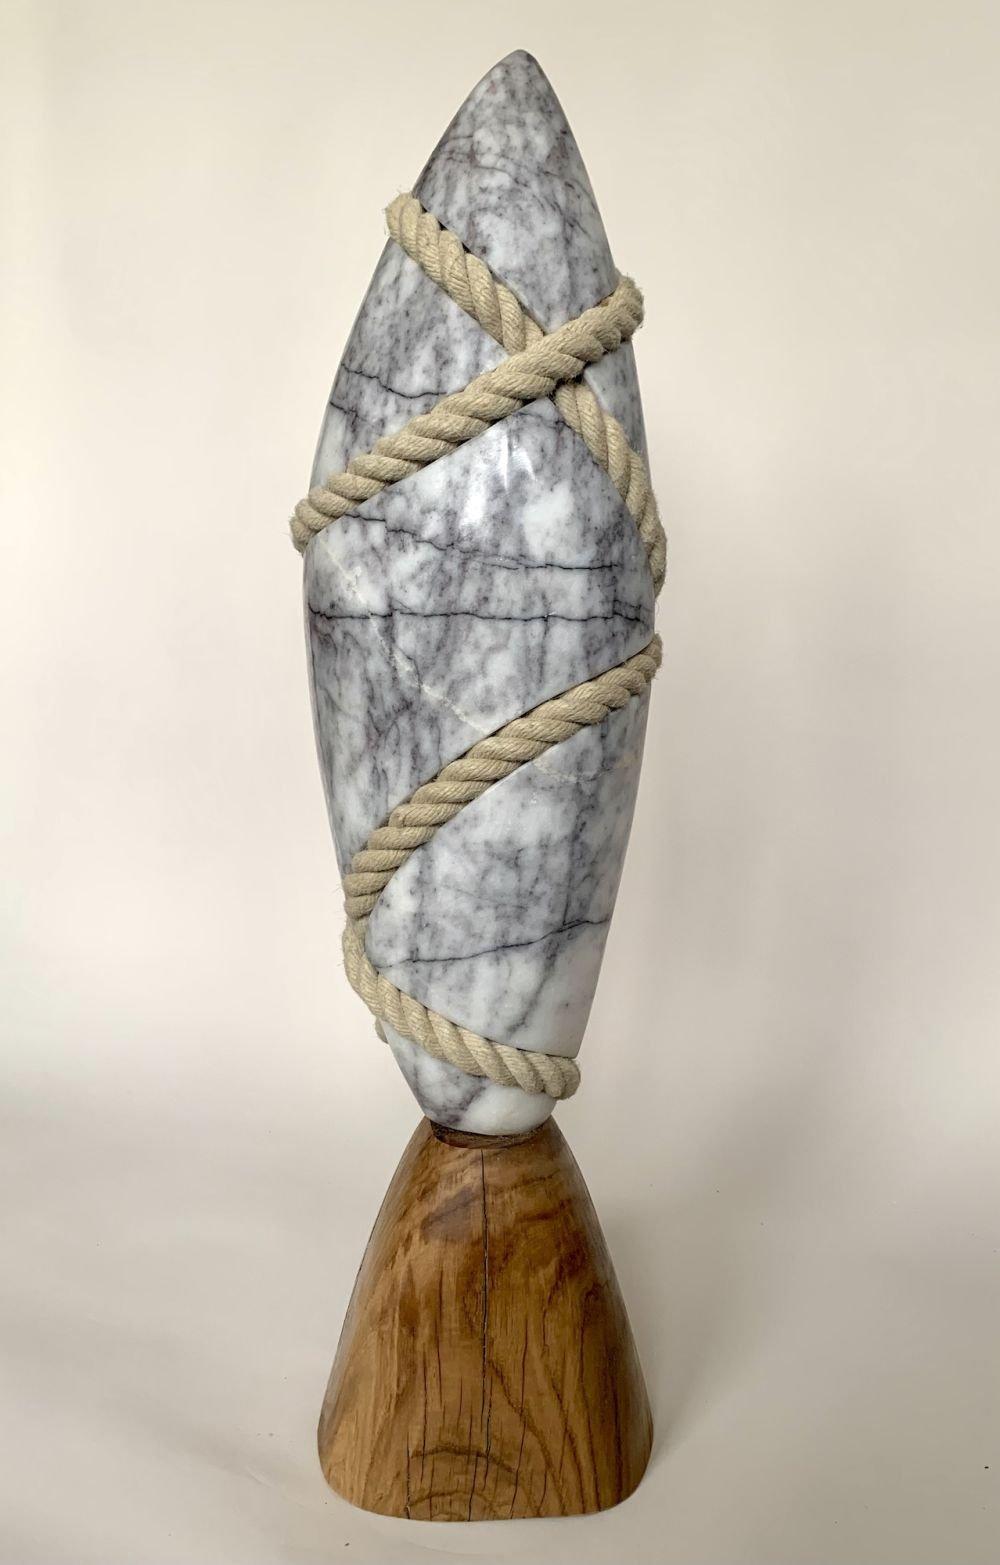 Aspiration de Peter Brooke-Ball - Sculpture abstraite en marbre, chêne et corde